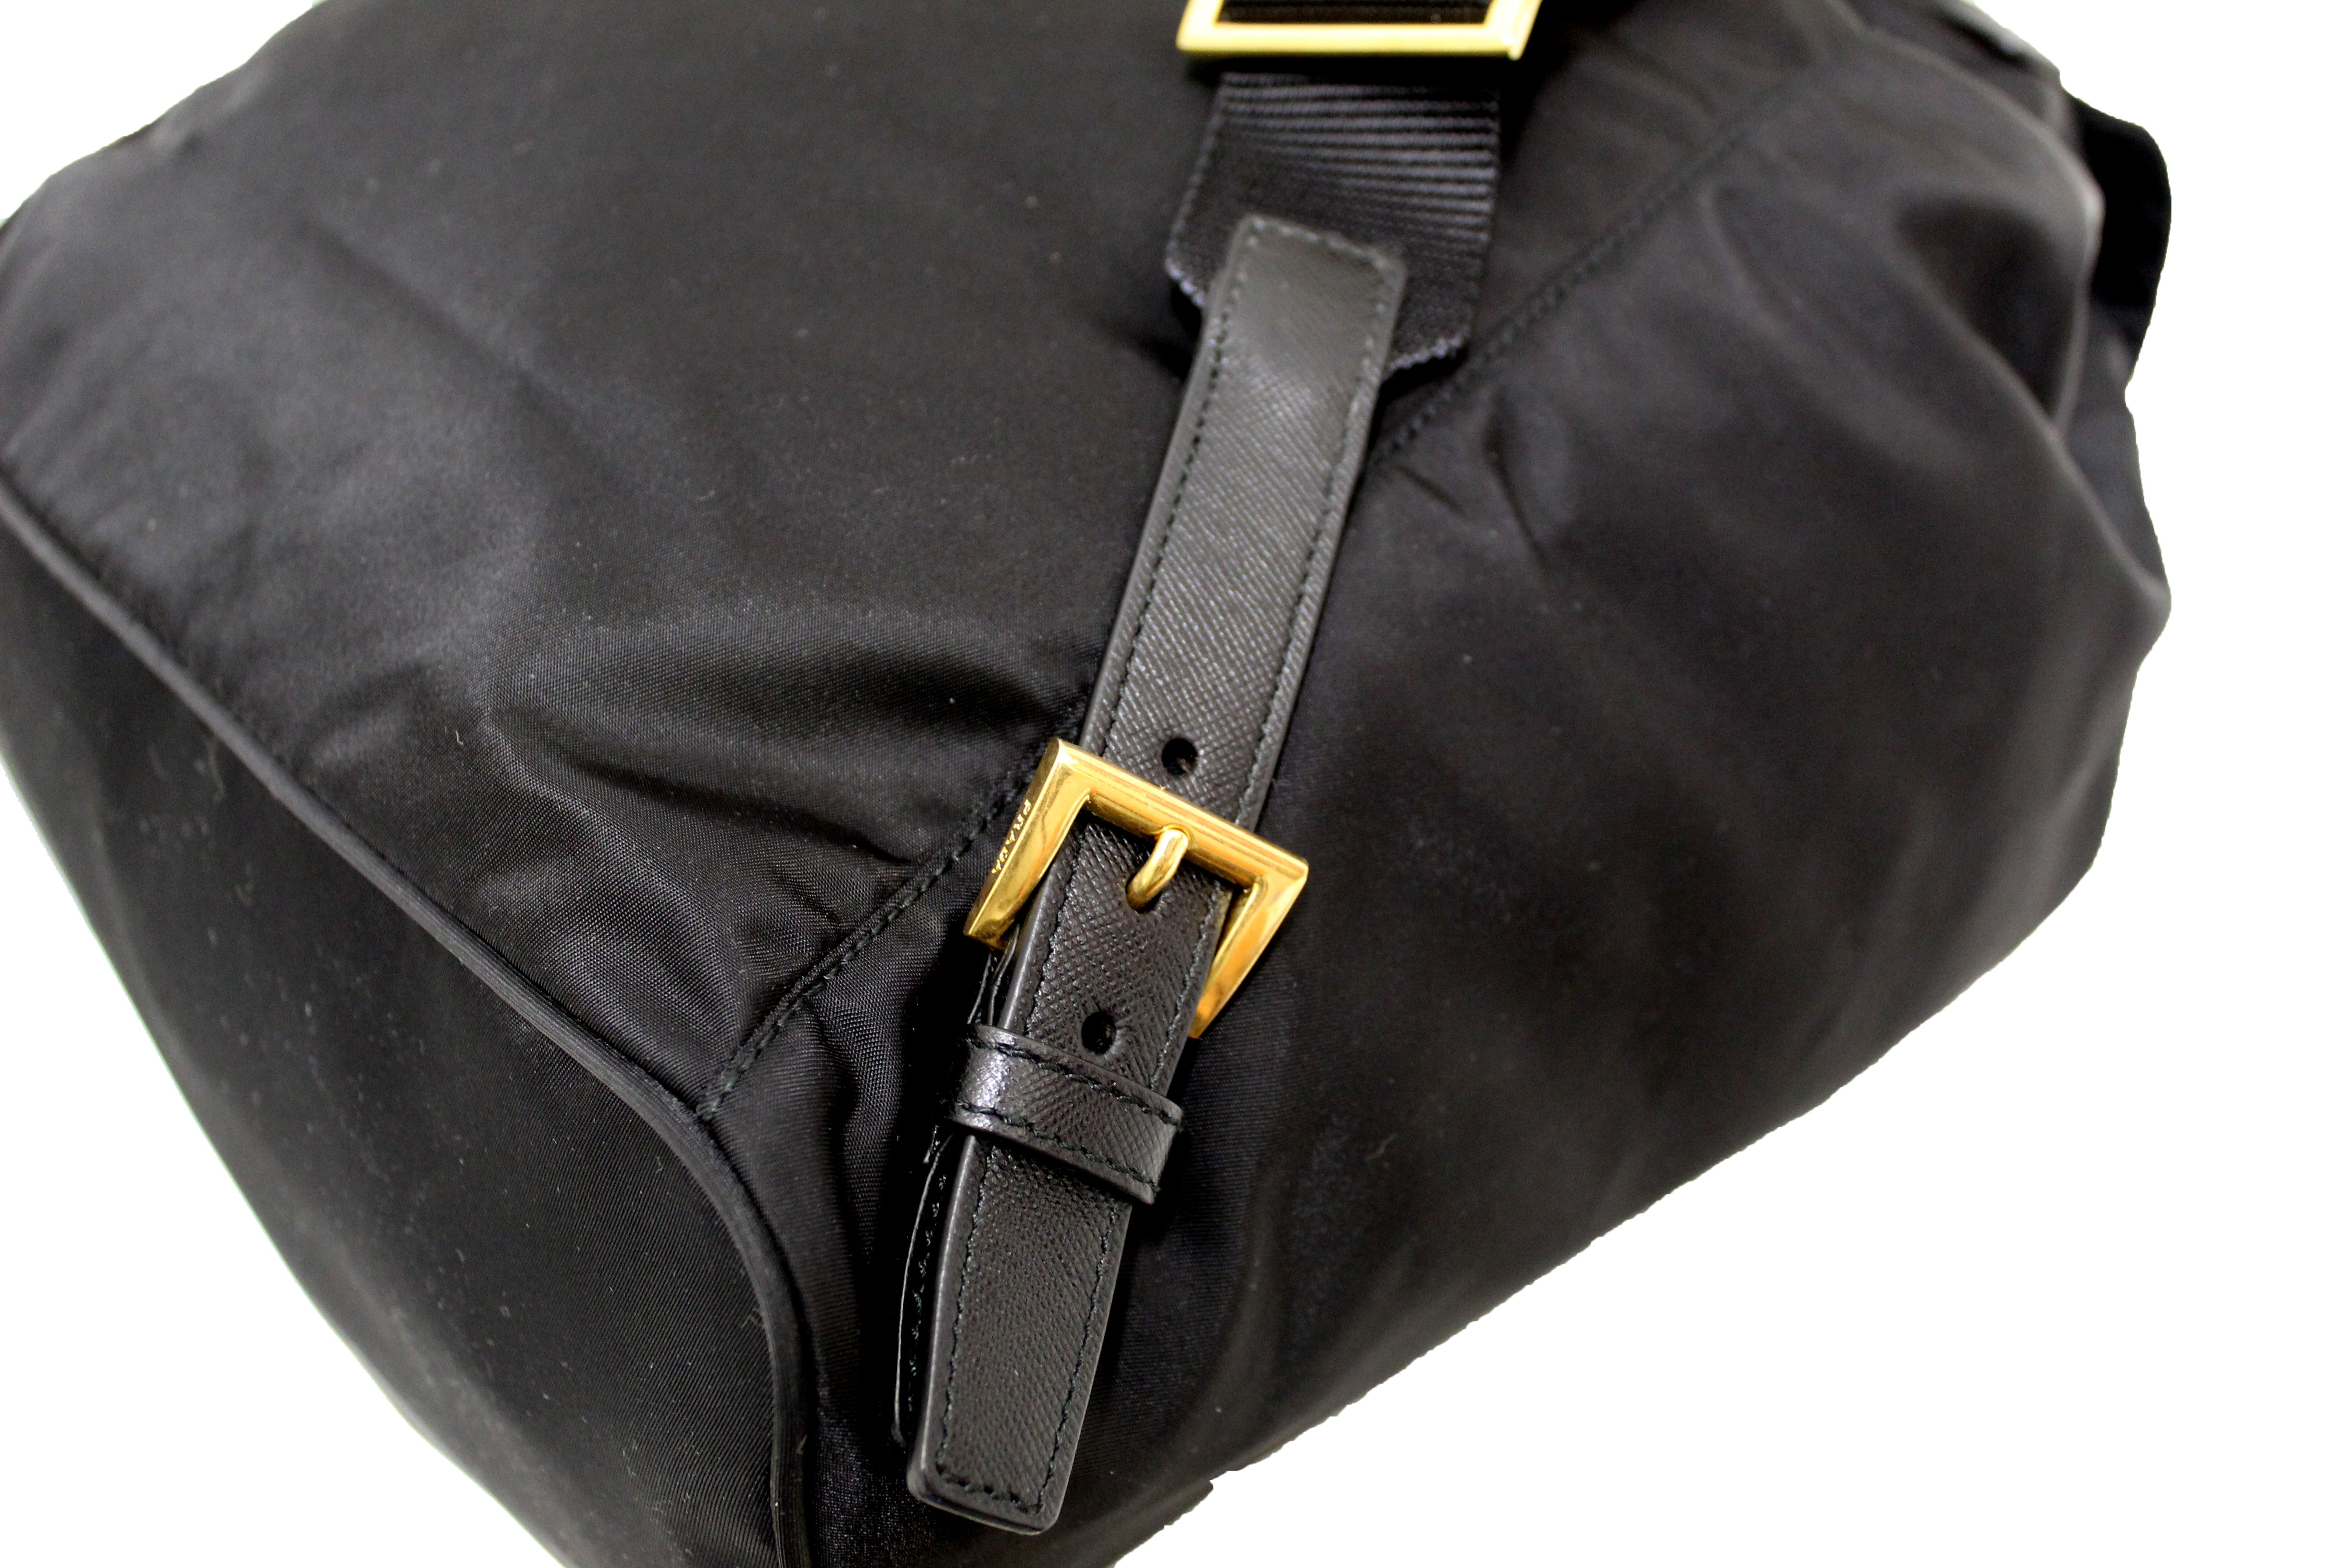 Authentic PRADA Tessuto Nylon Saffiano Leather Black Tote Bag